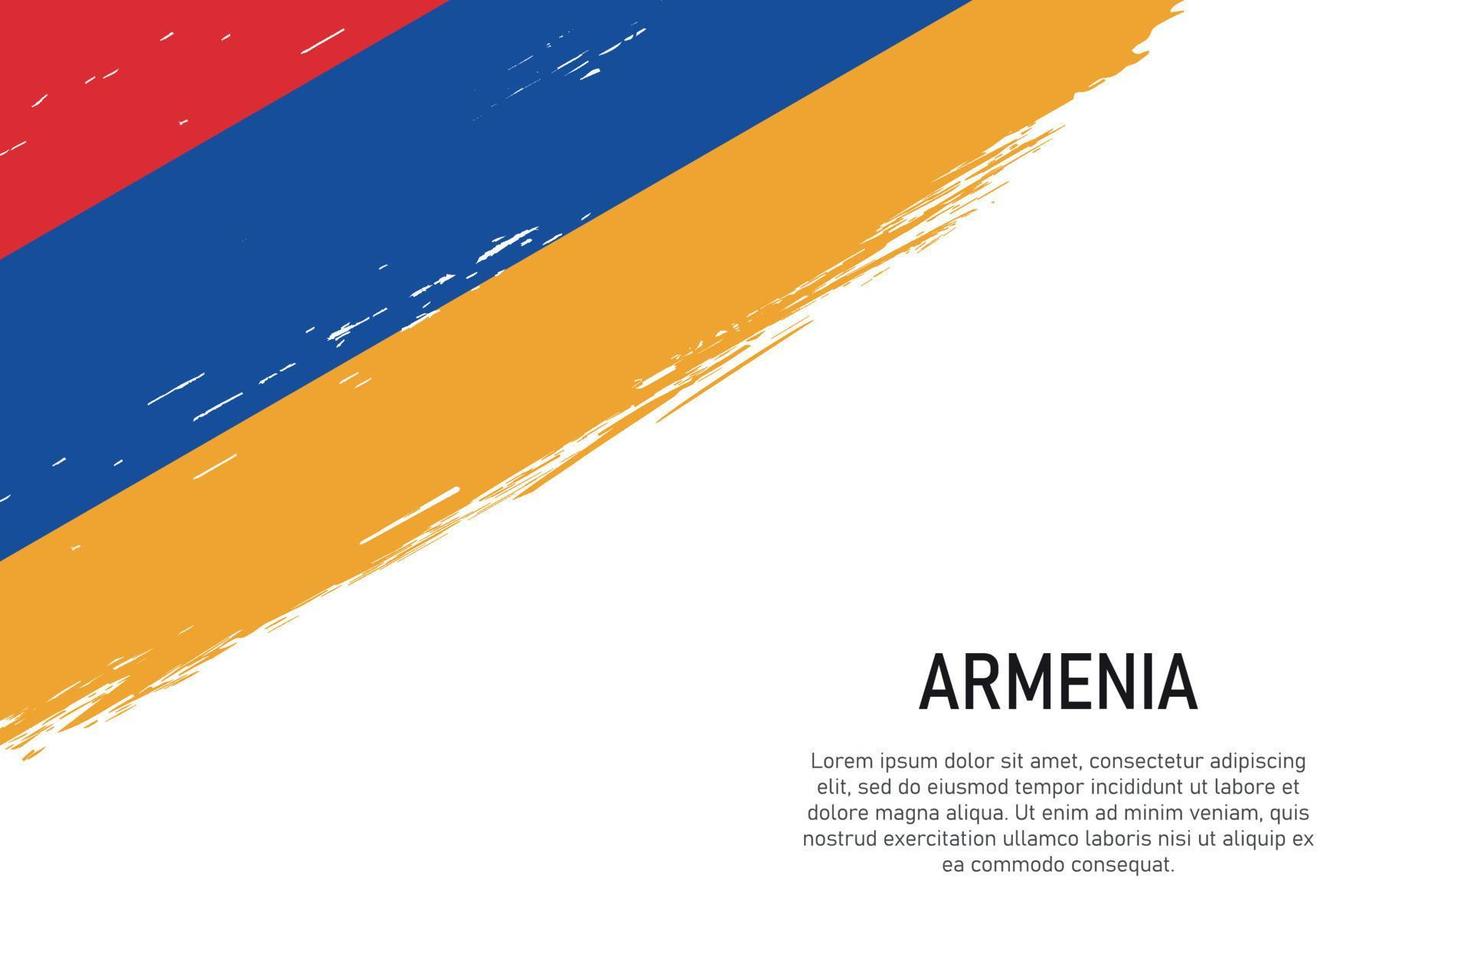 Grunge styled brush stroke background with flag of Armenia vector